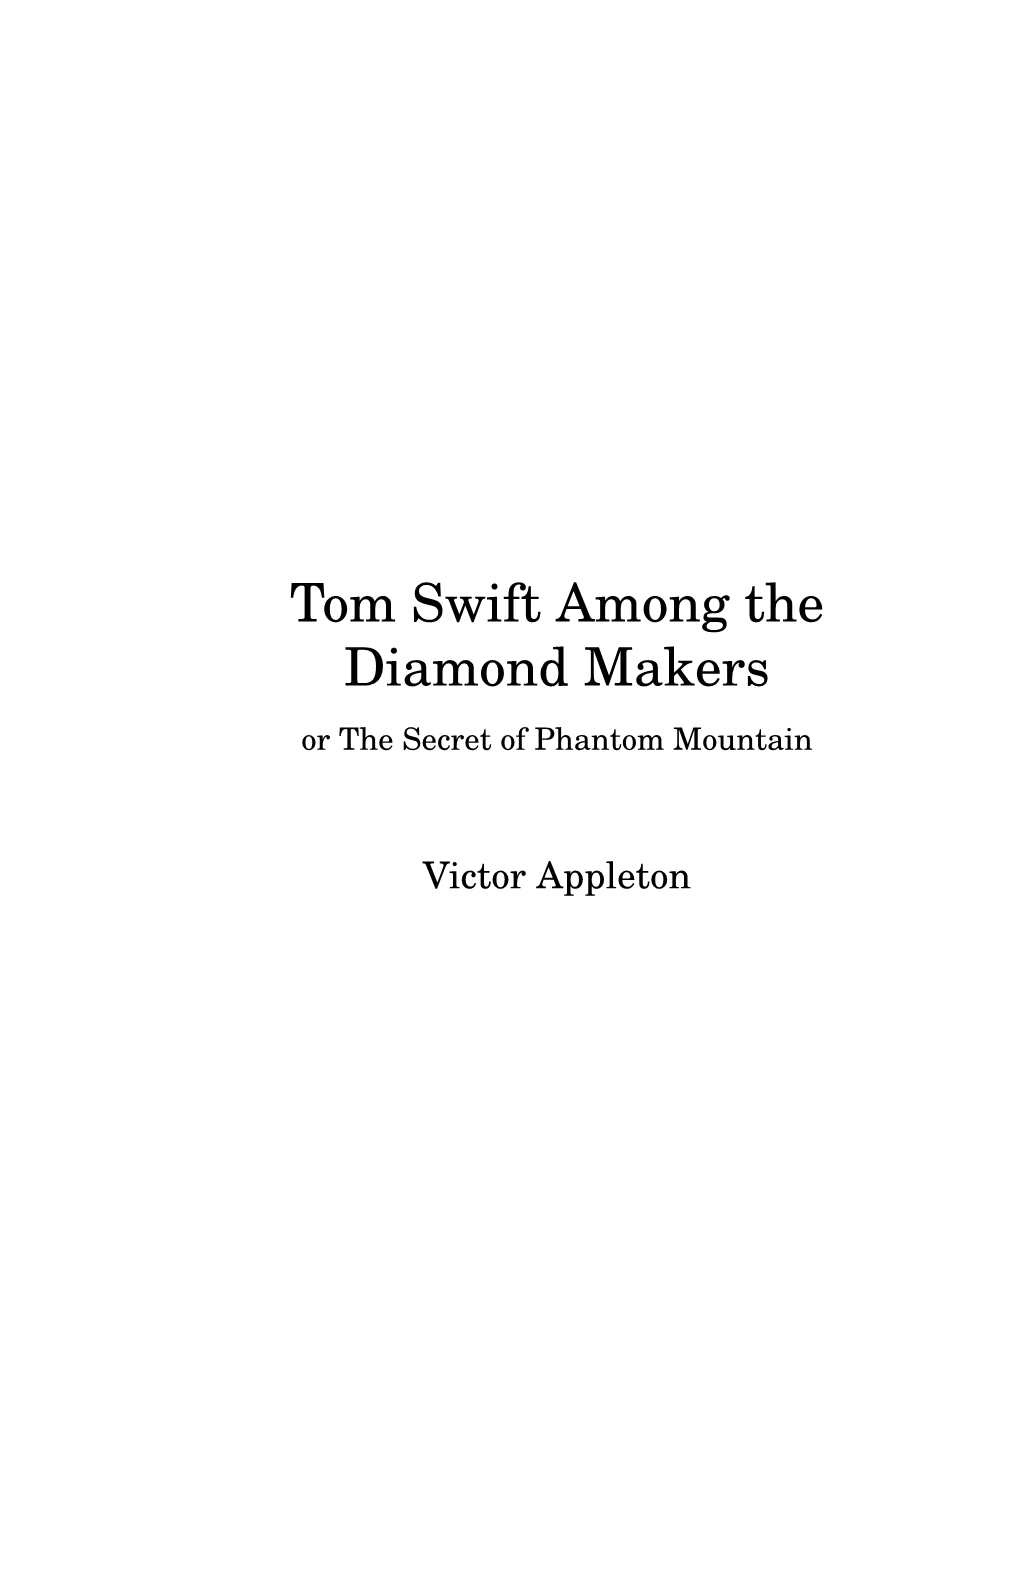 Tom Swift Among the Diamond Makers Or the Secret of Phantom Mountain